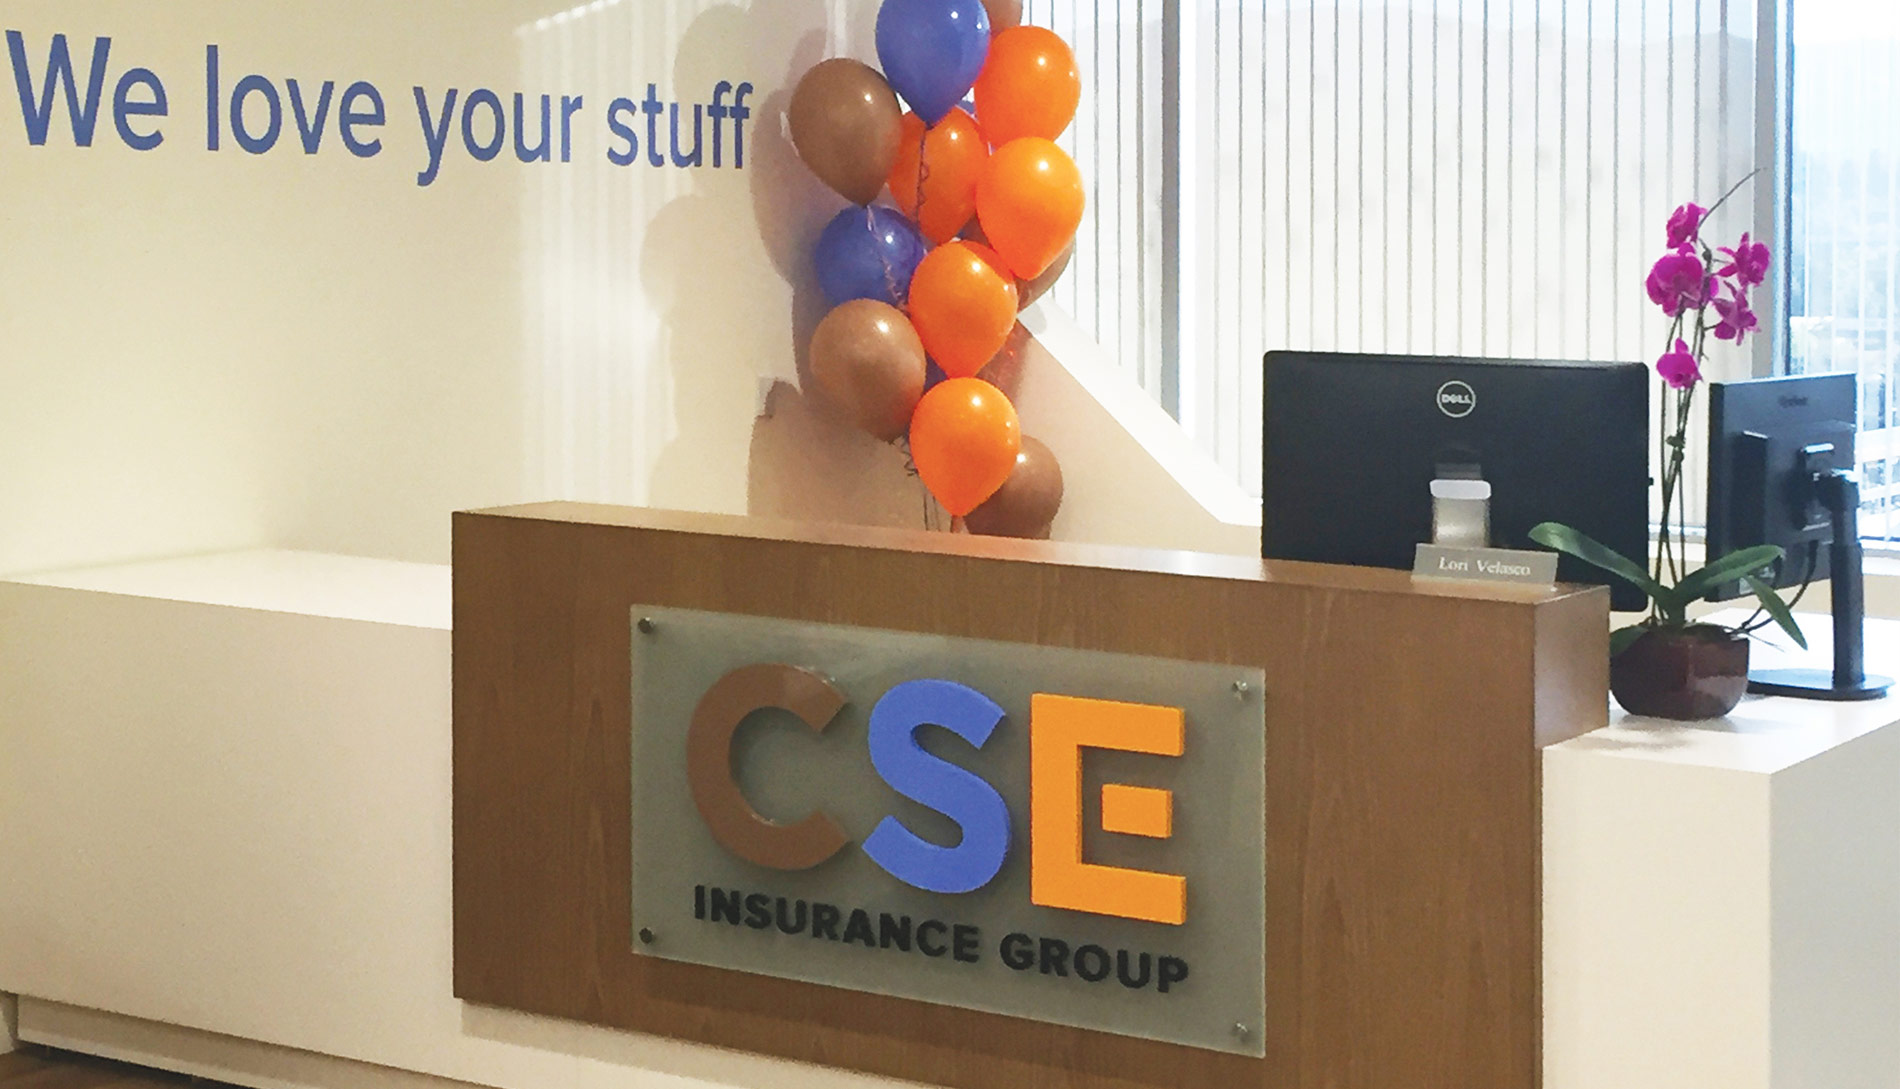 CSE Insurance Group Environment Design